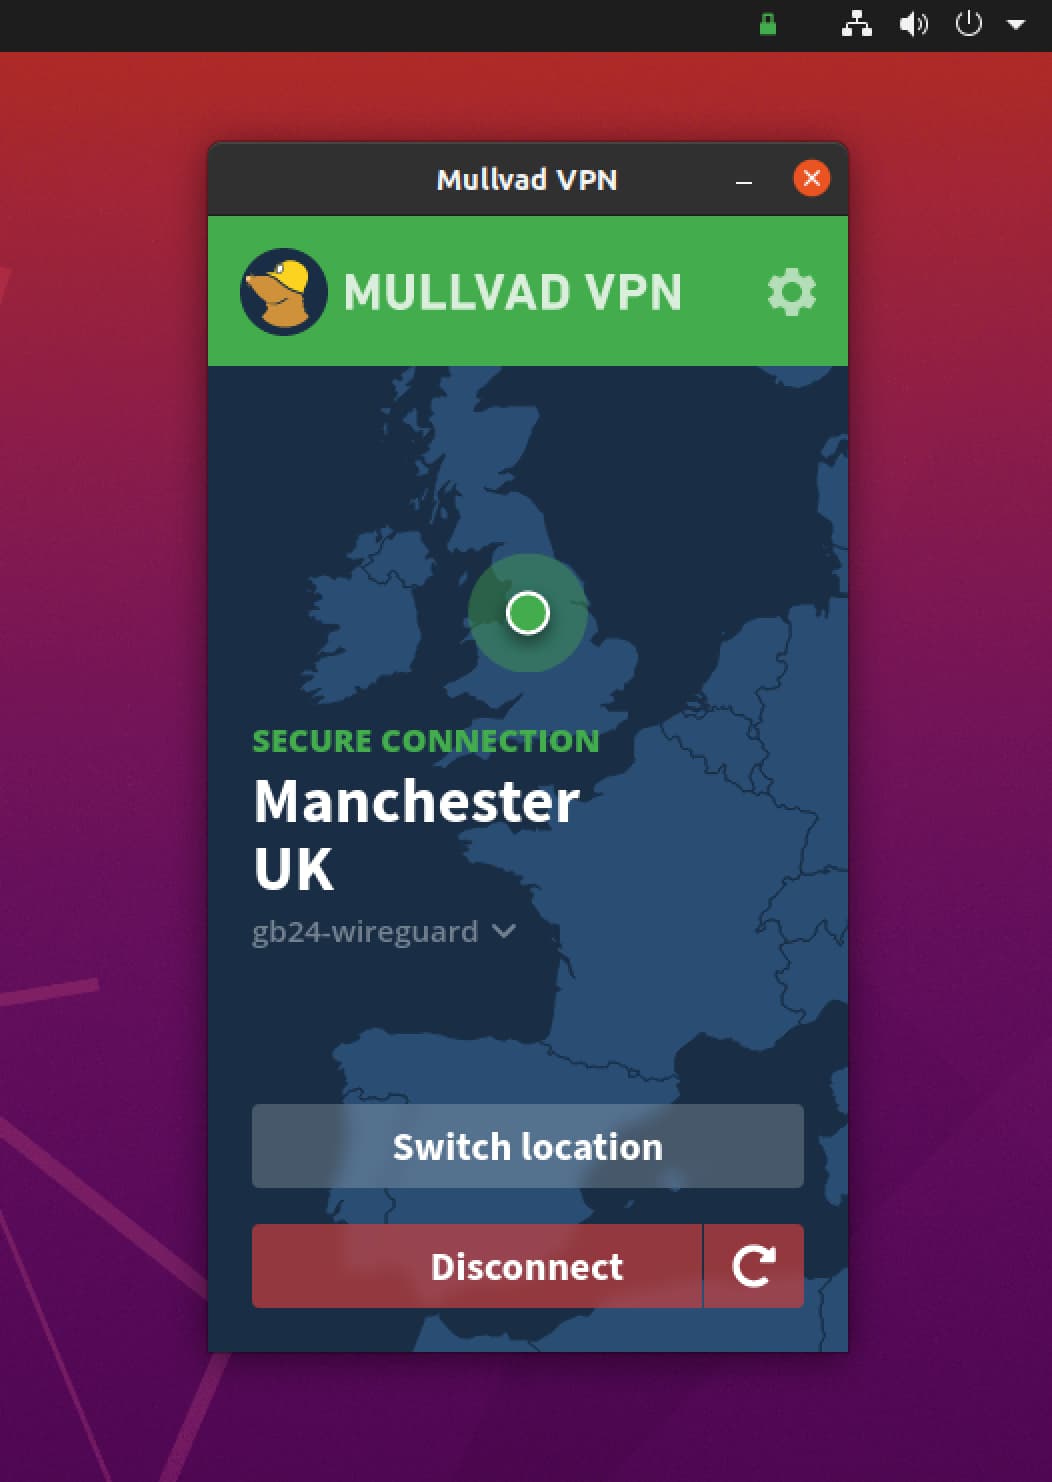 Mullvad VPN app home screen on Linux